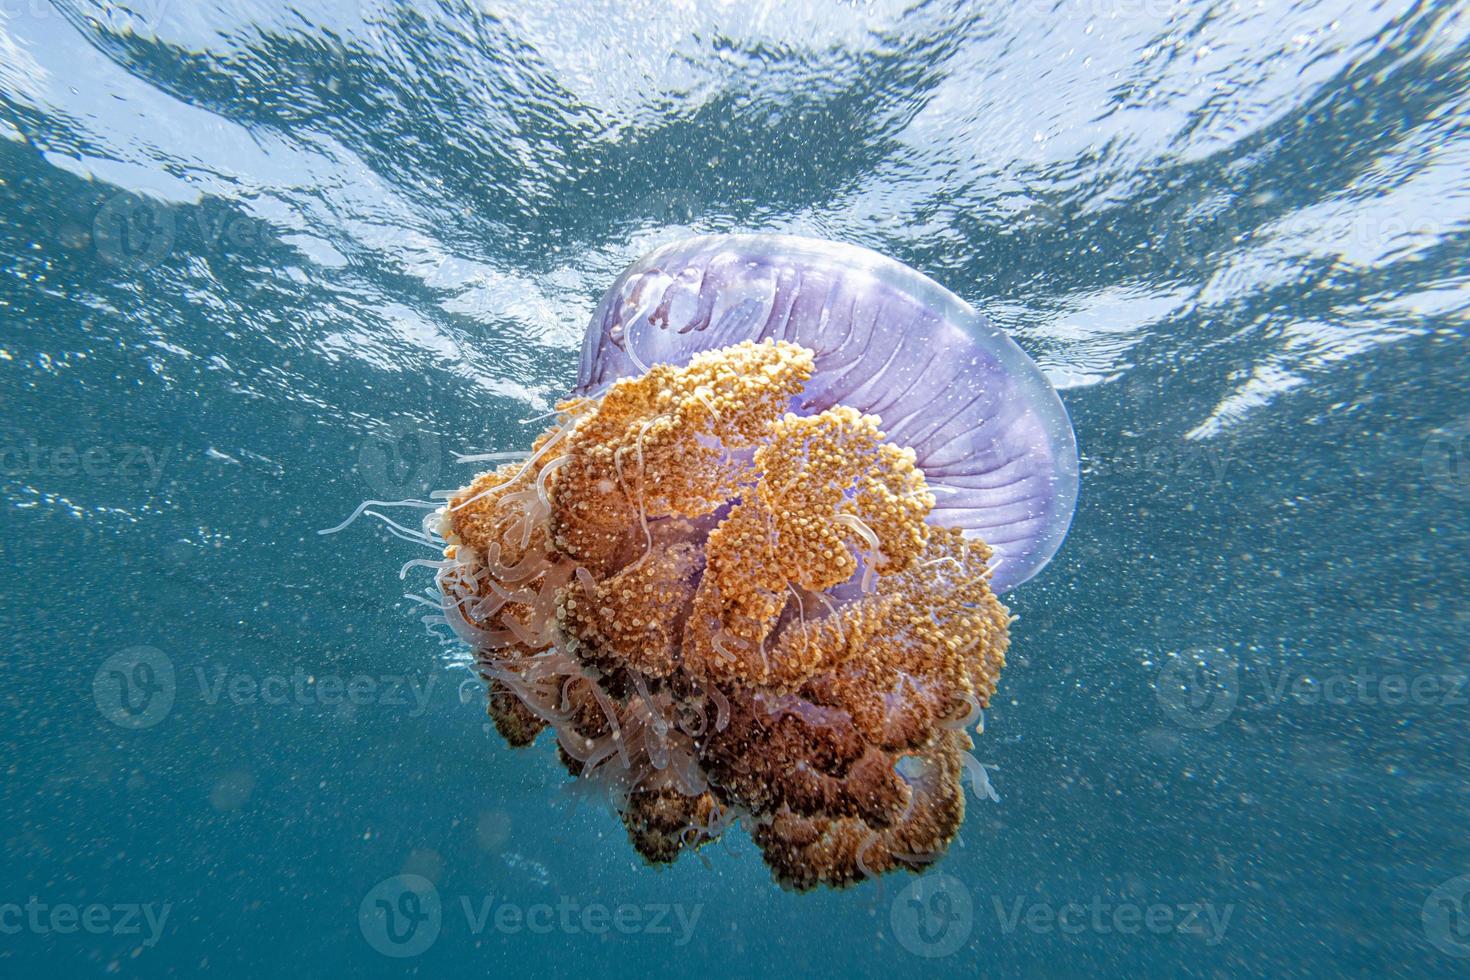 cotylorhiza gigante medusa foto